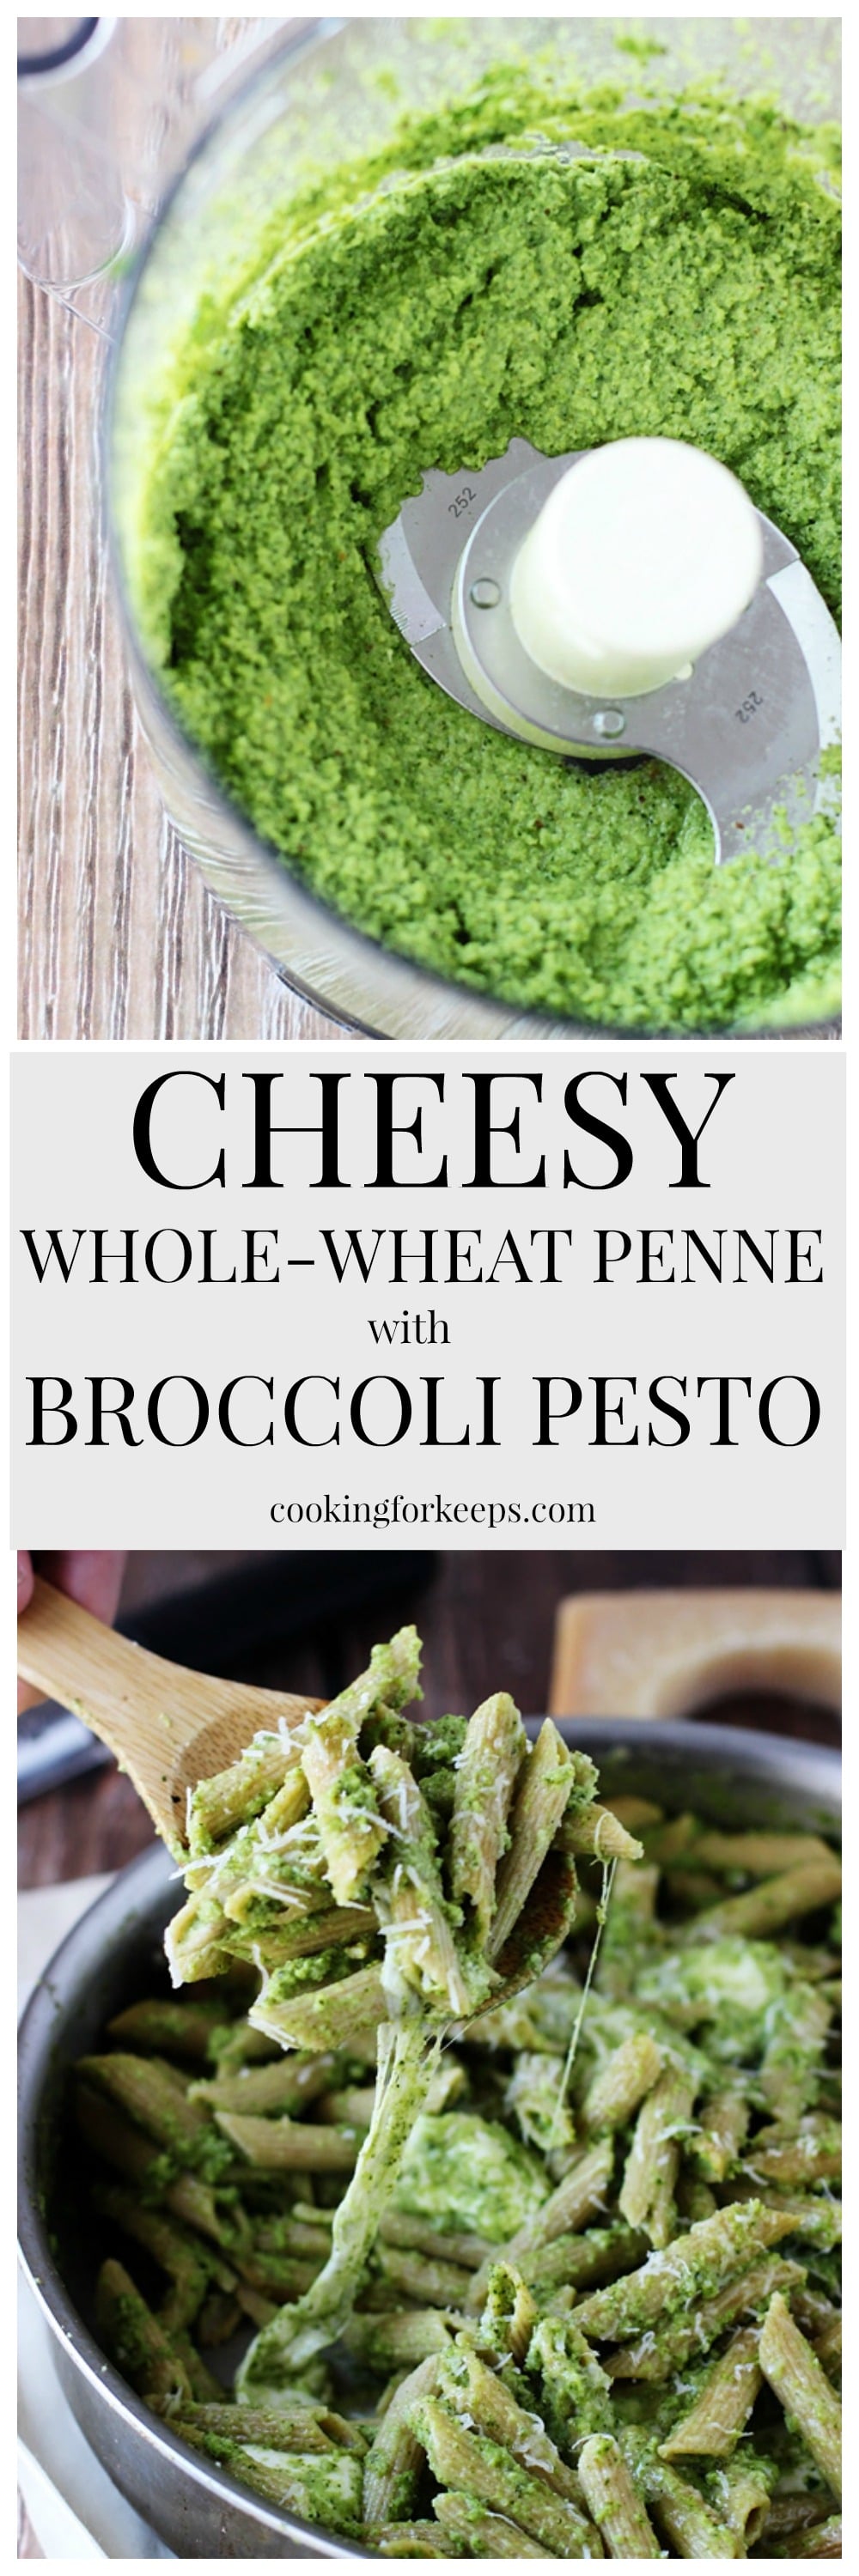 Cheesy Whole-Wheat Penne with Broccoli Pesto